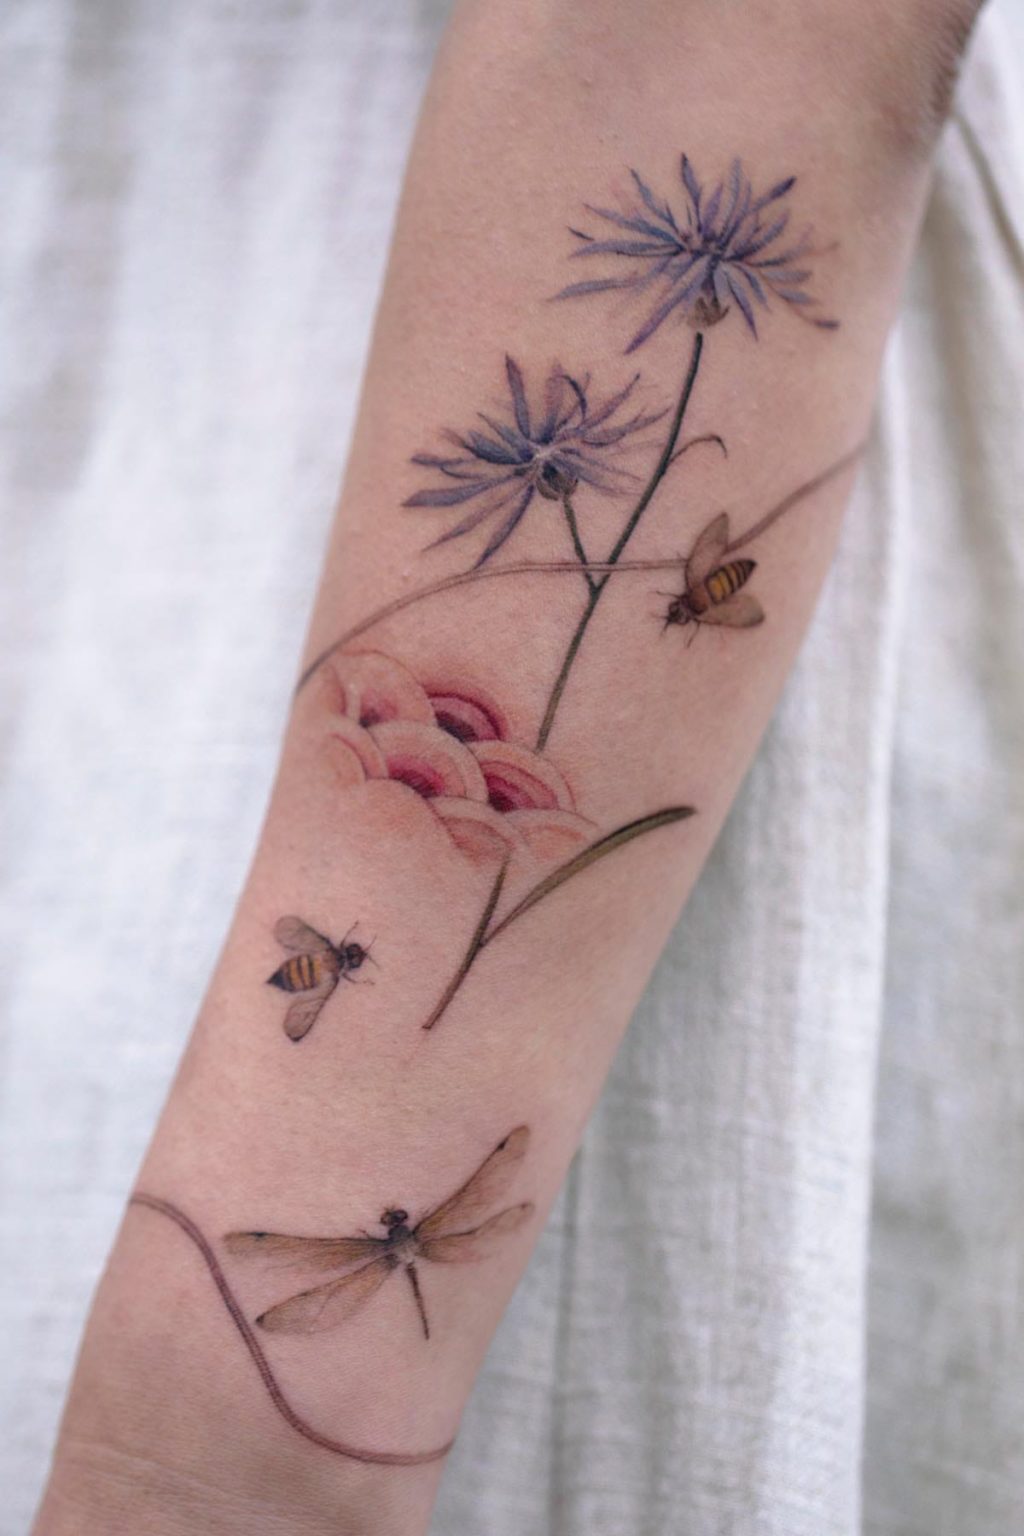 Bee tattoo on forearm